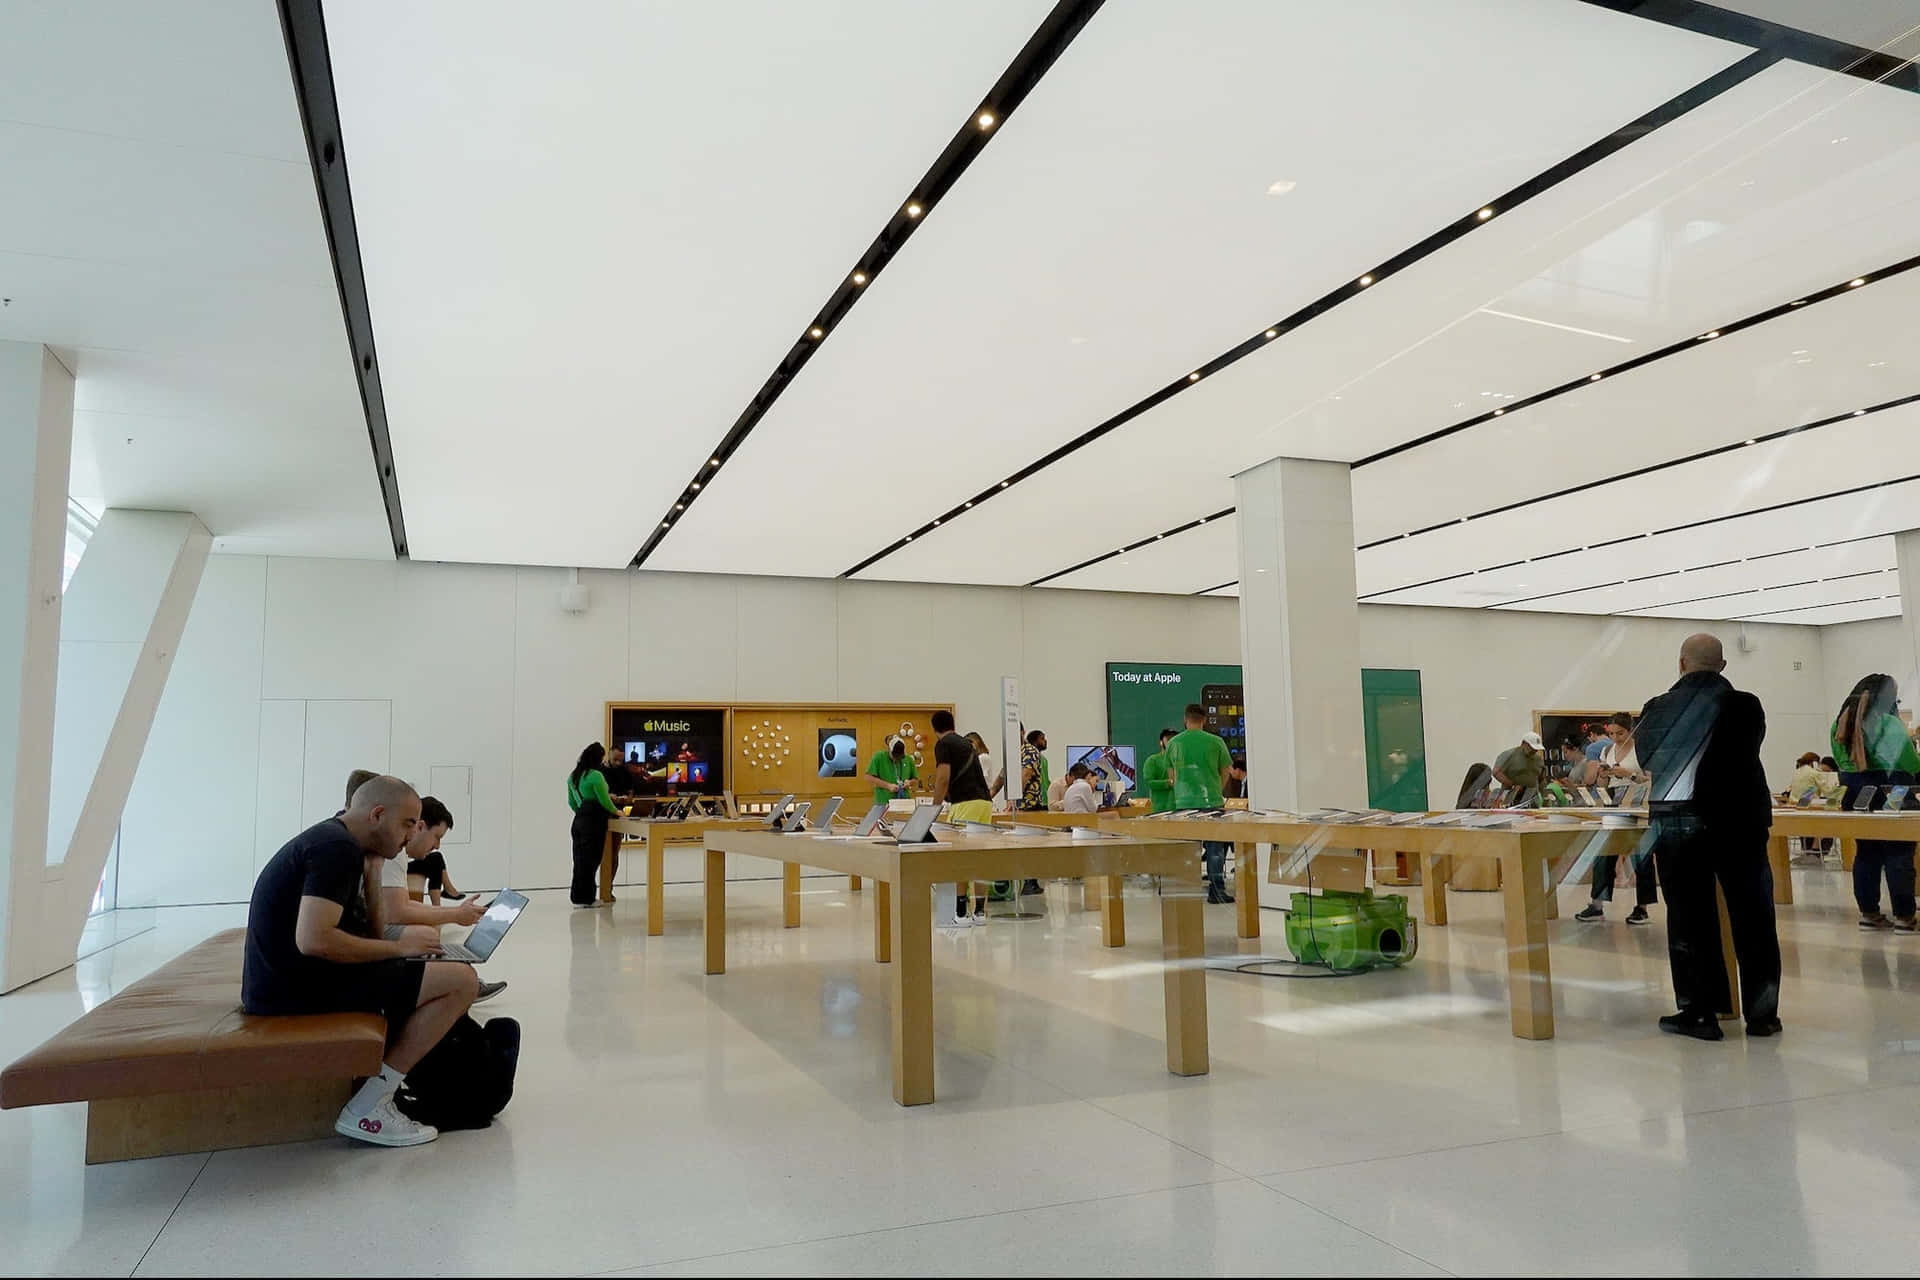 Apple Store Interior Experience Wallpaper